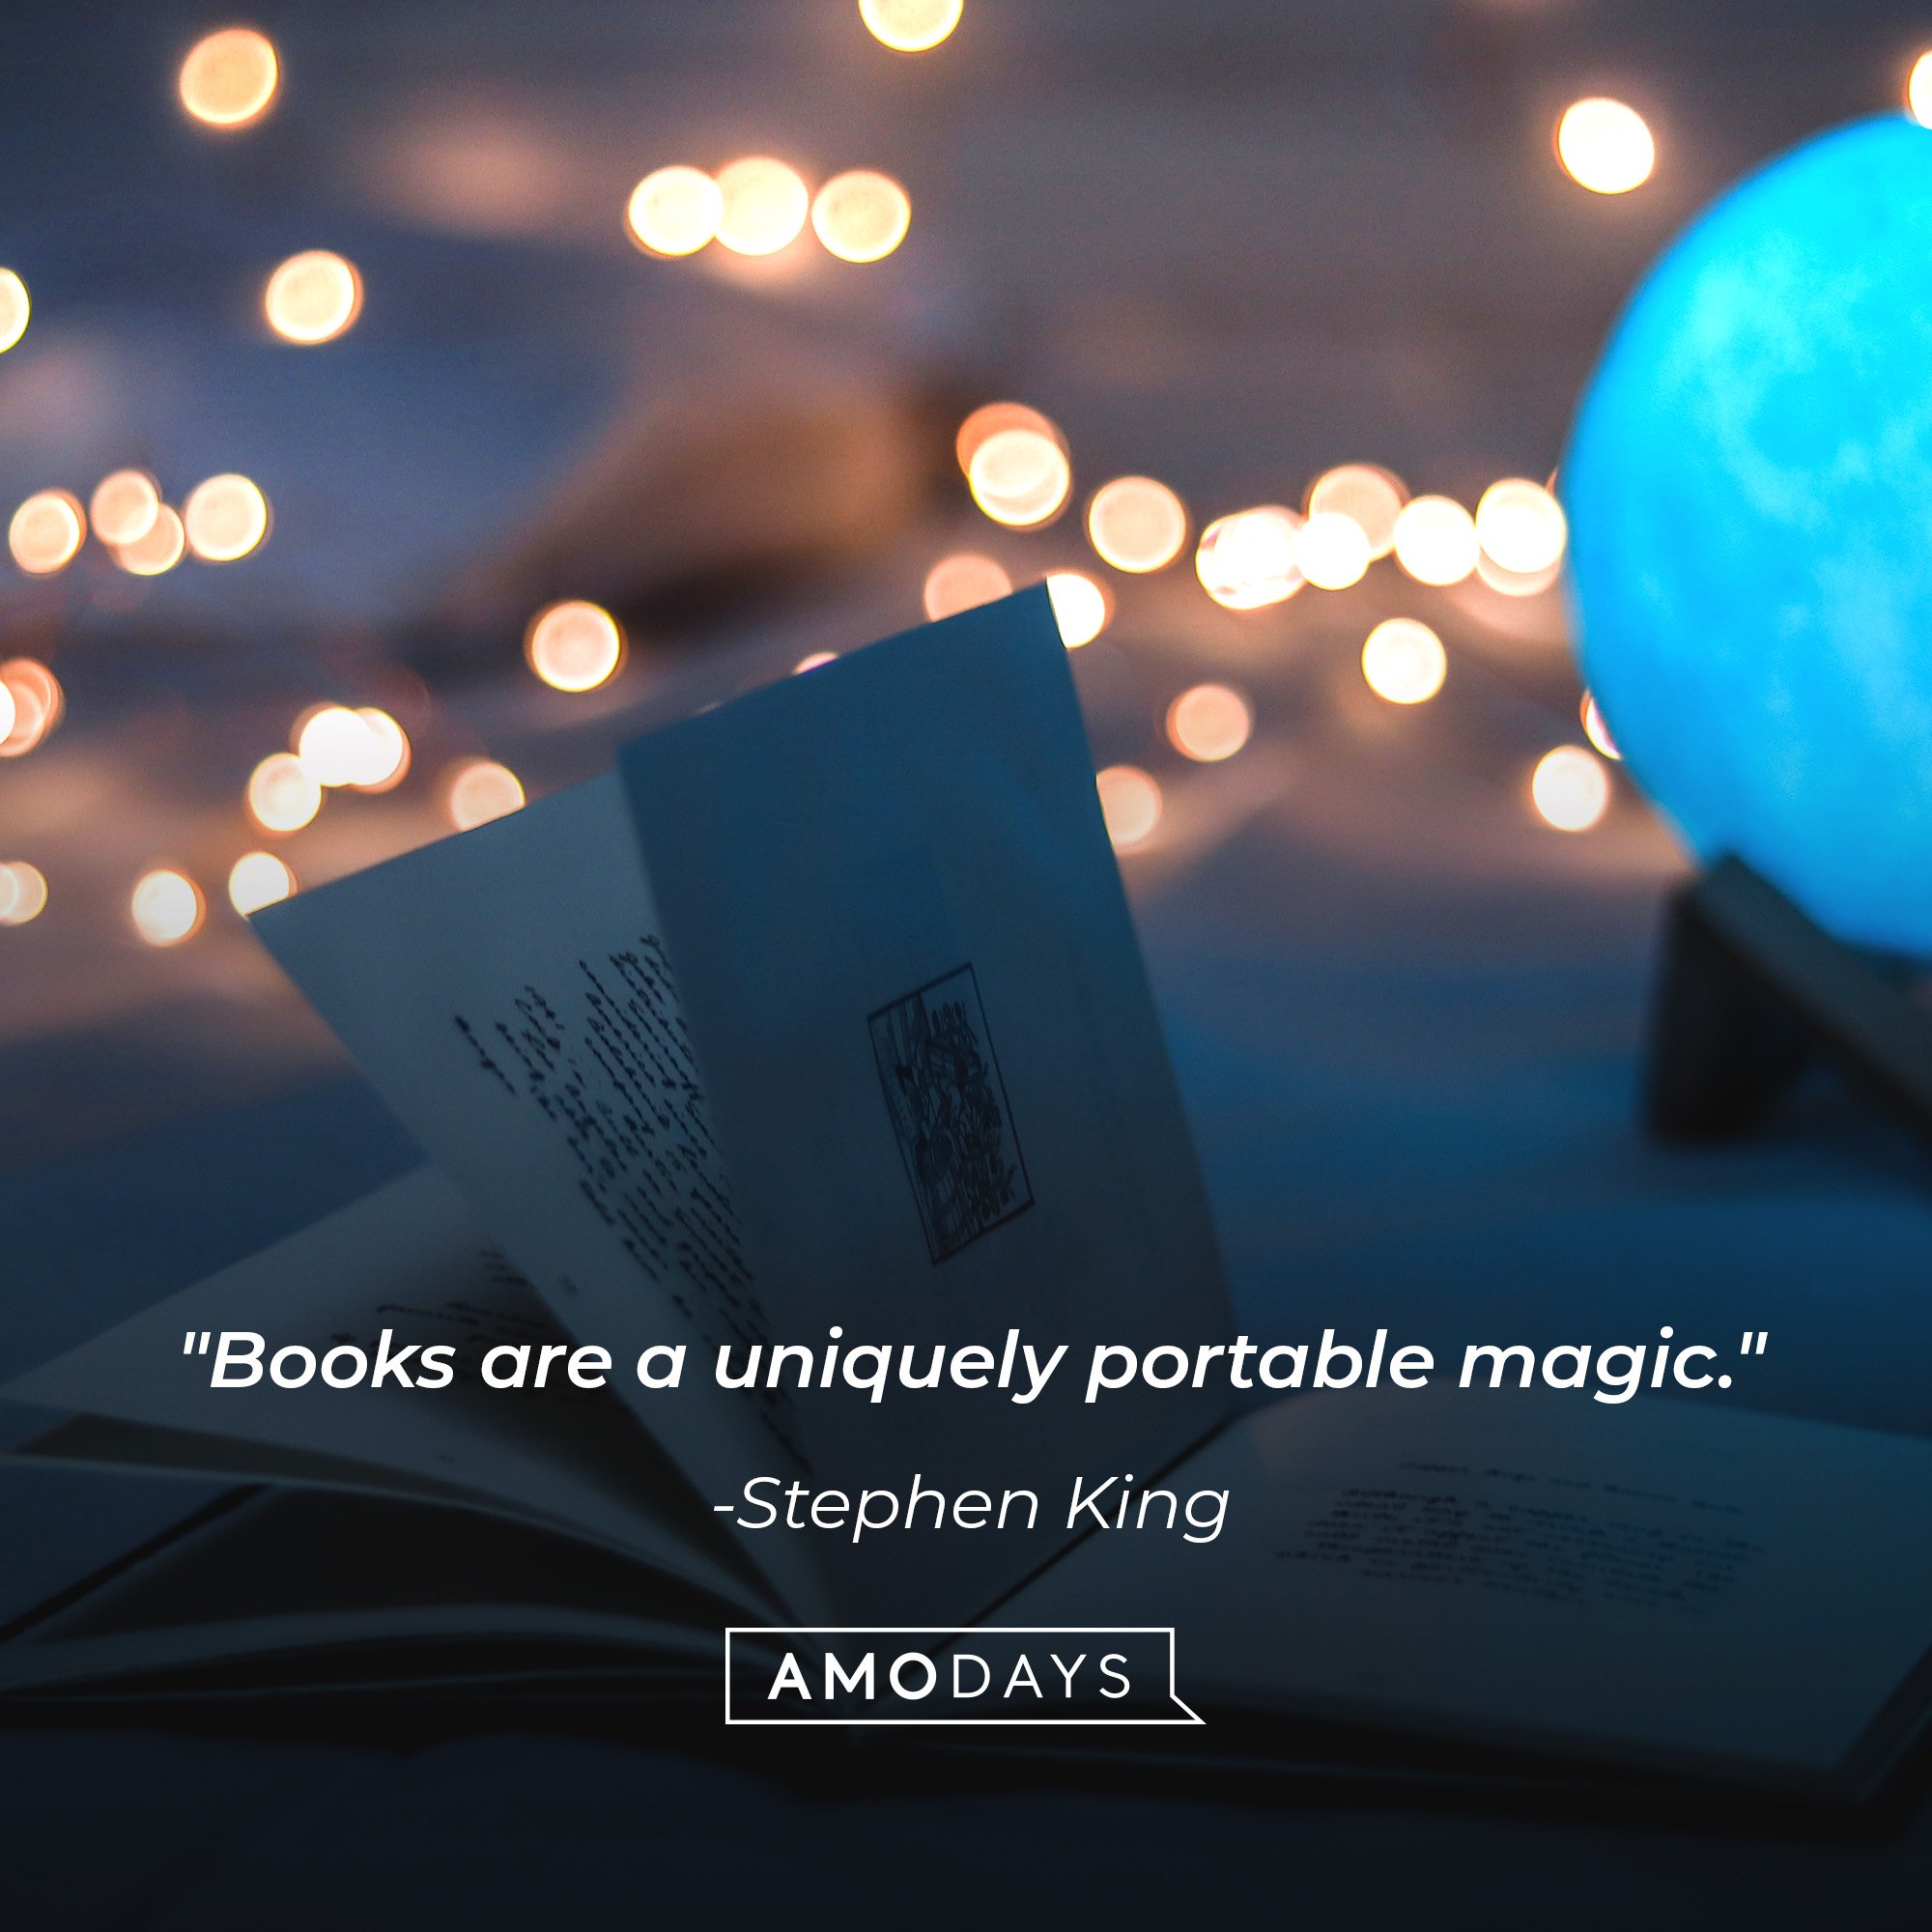 Stephen King’s quote: "Books are a uniquely portable magic." | Image: AmoDays